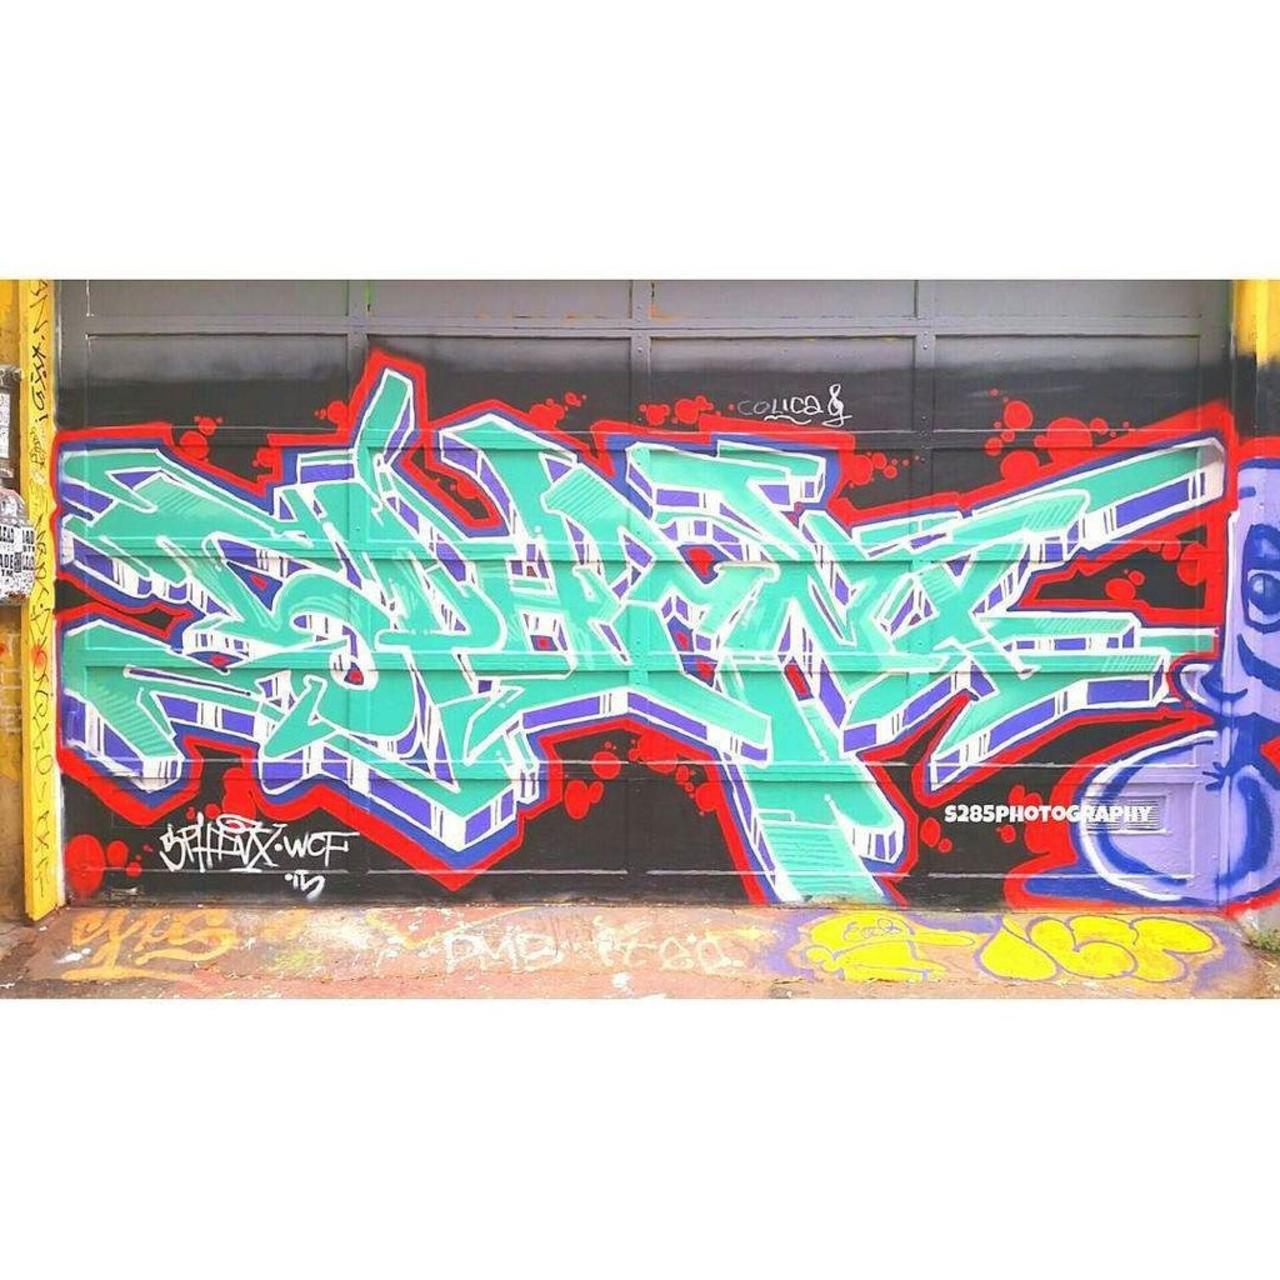 via #fresh2defart "http://ift.tt/1LTRG9W" #graffiti #streetart http://t.co/luDz0RNCXP